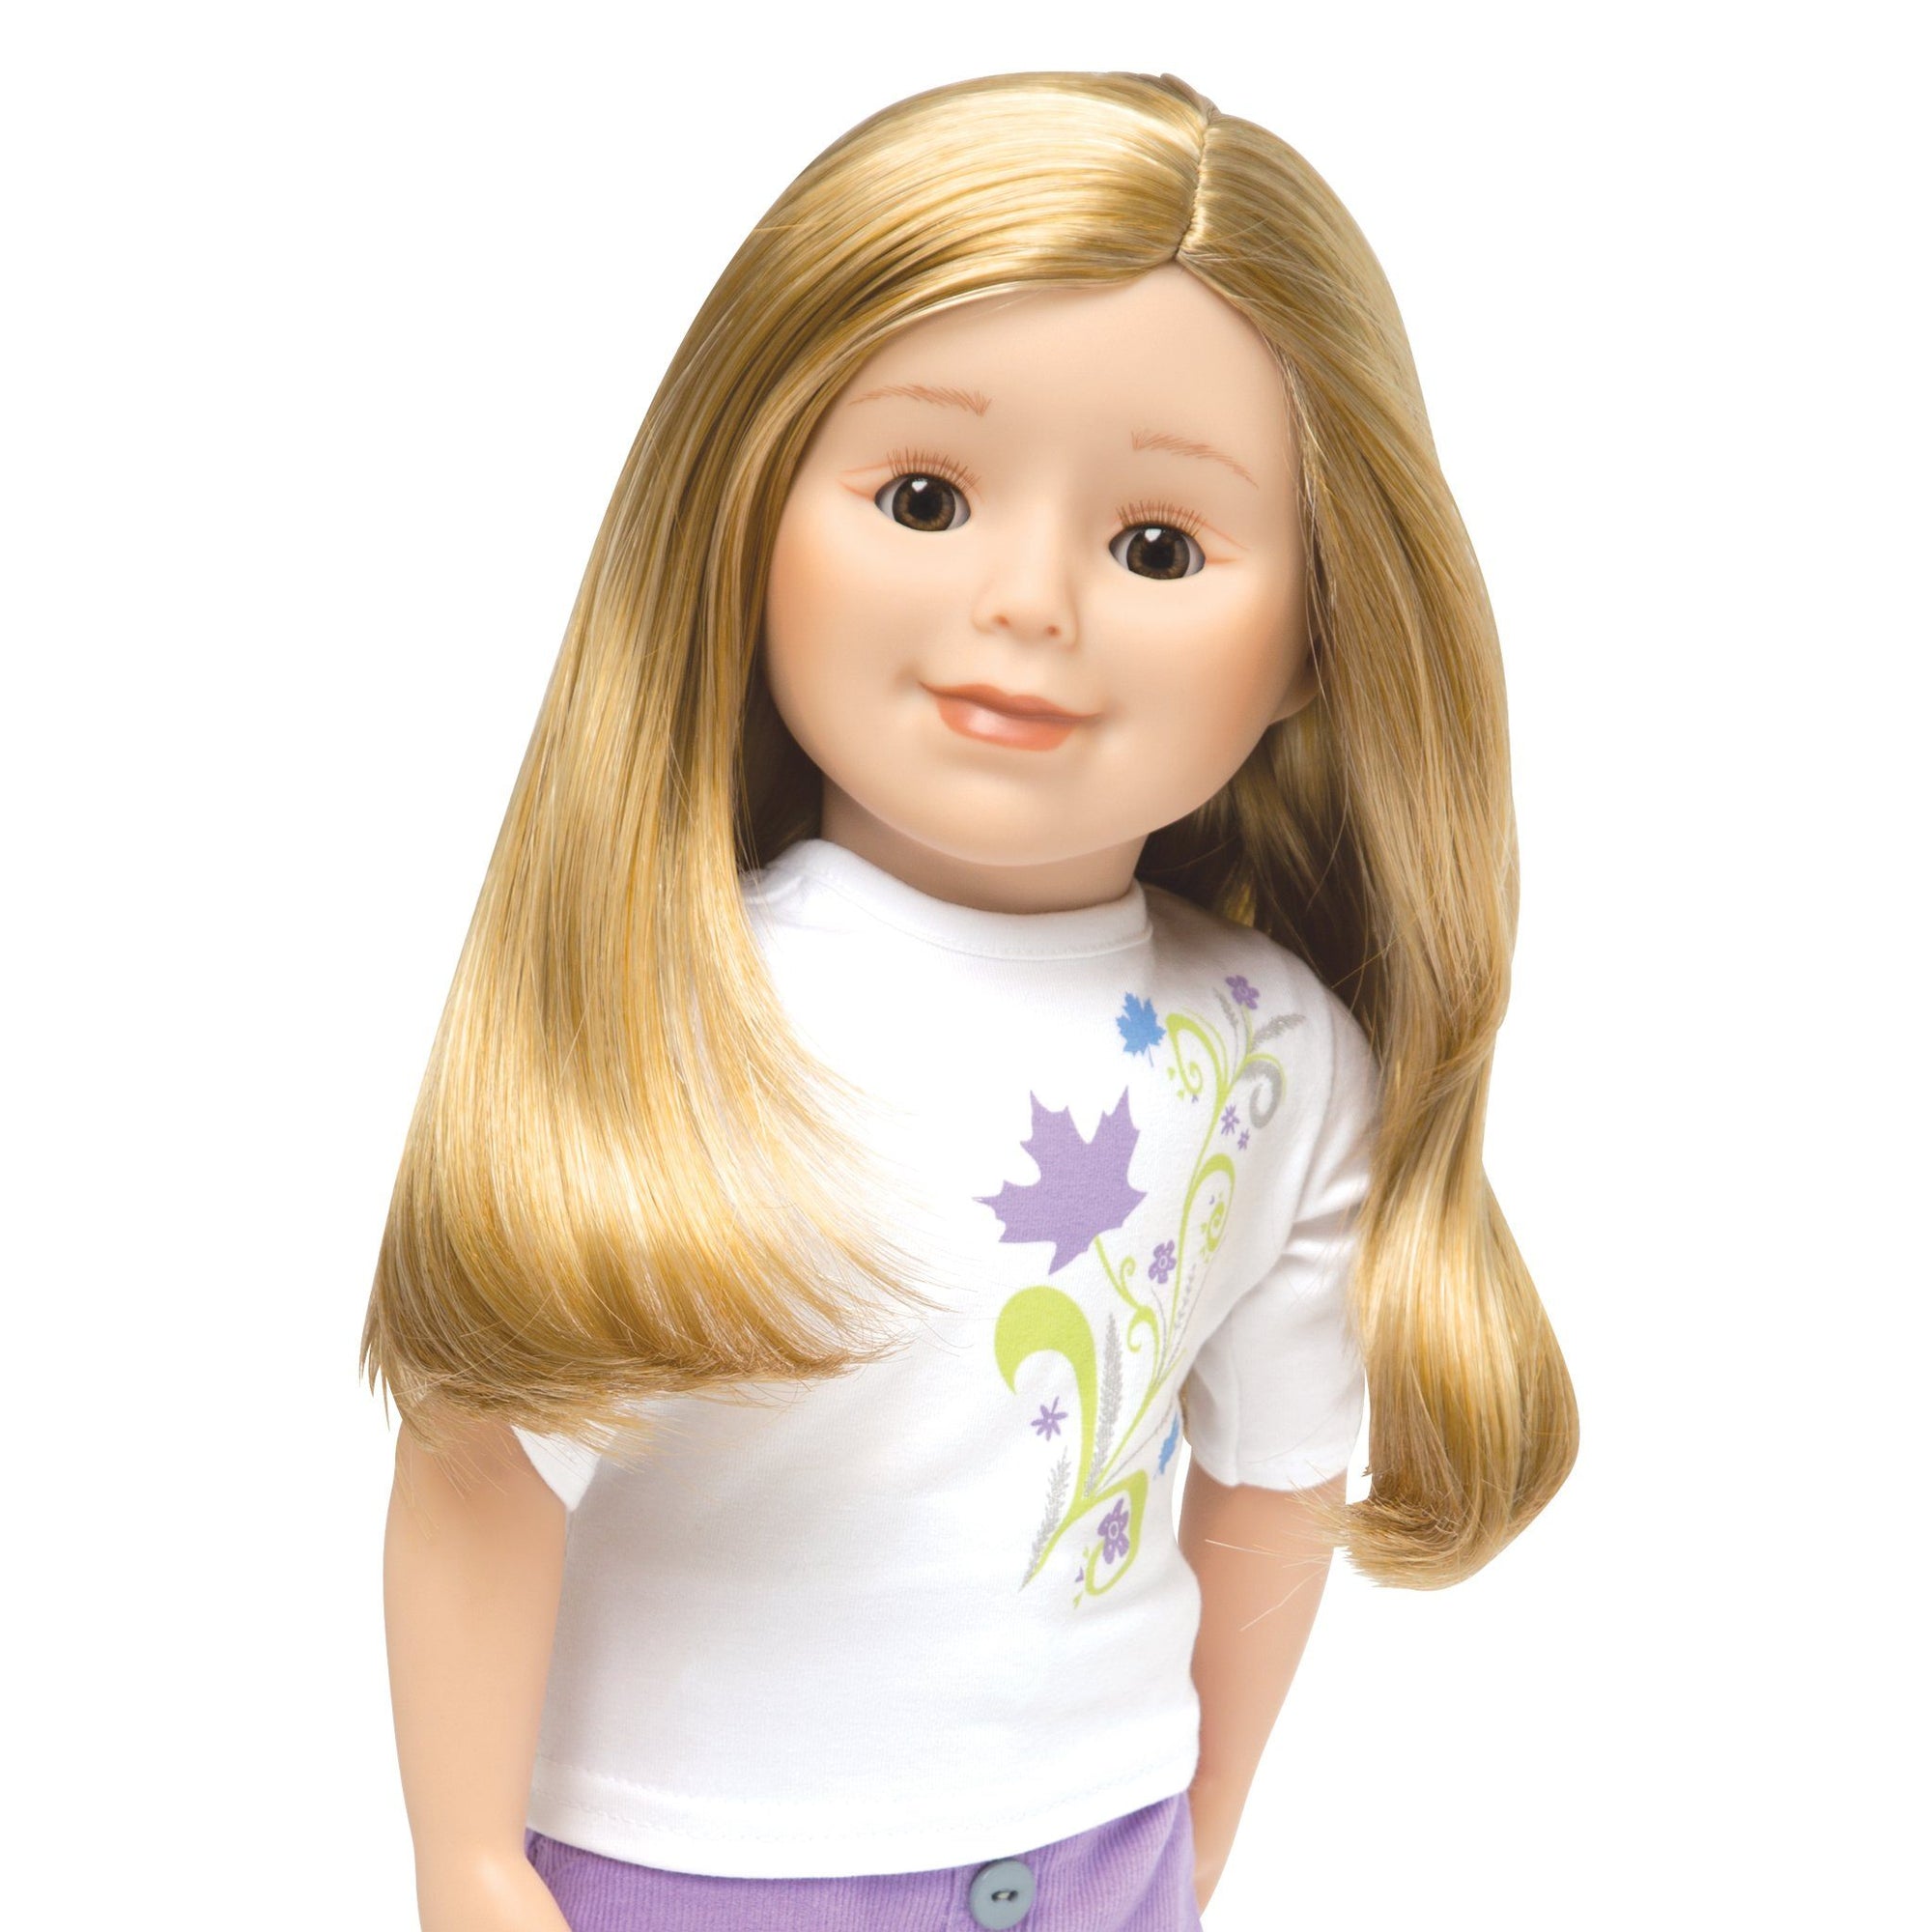 KMF21 Maplelea Friend 18 inch doll with long blonde hair, light skin, brown eyes